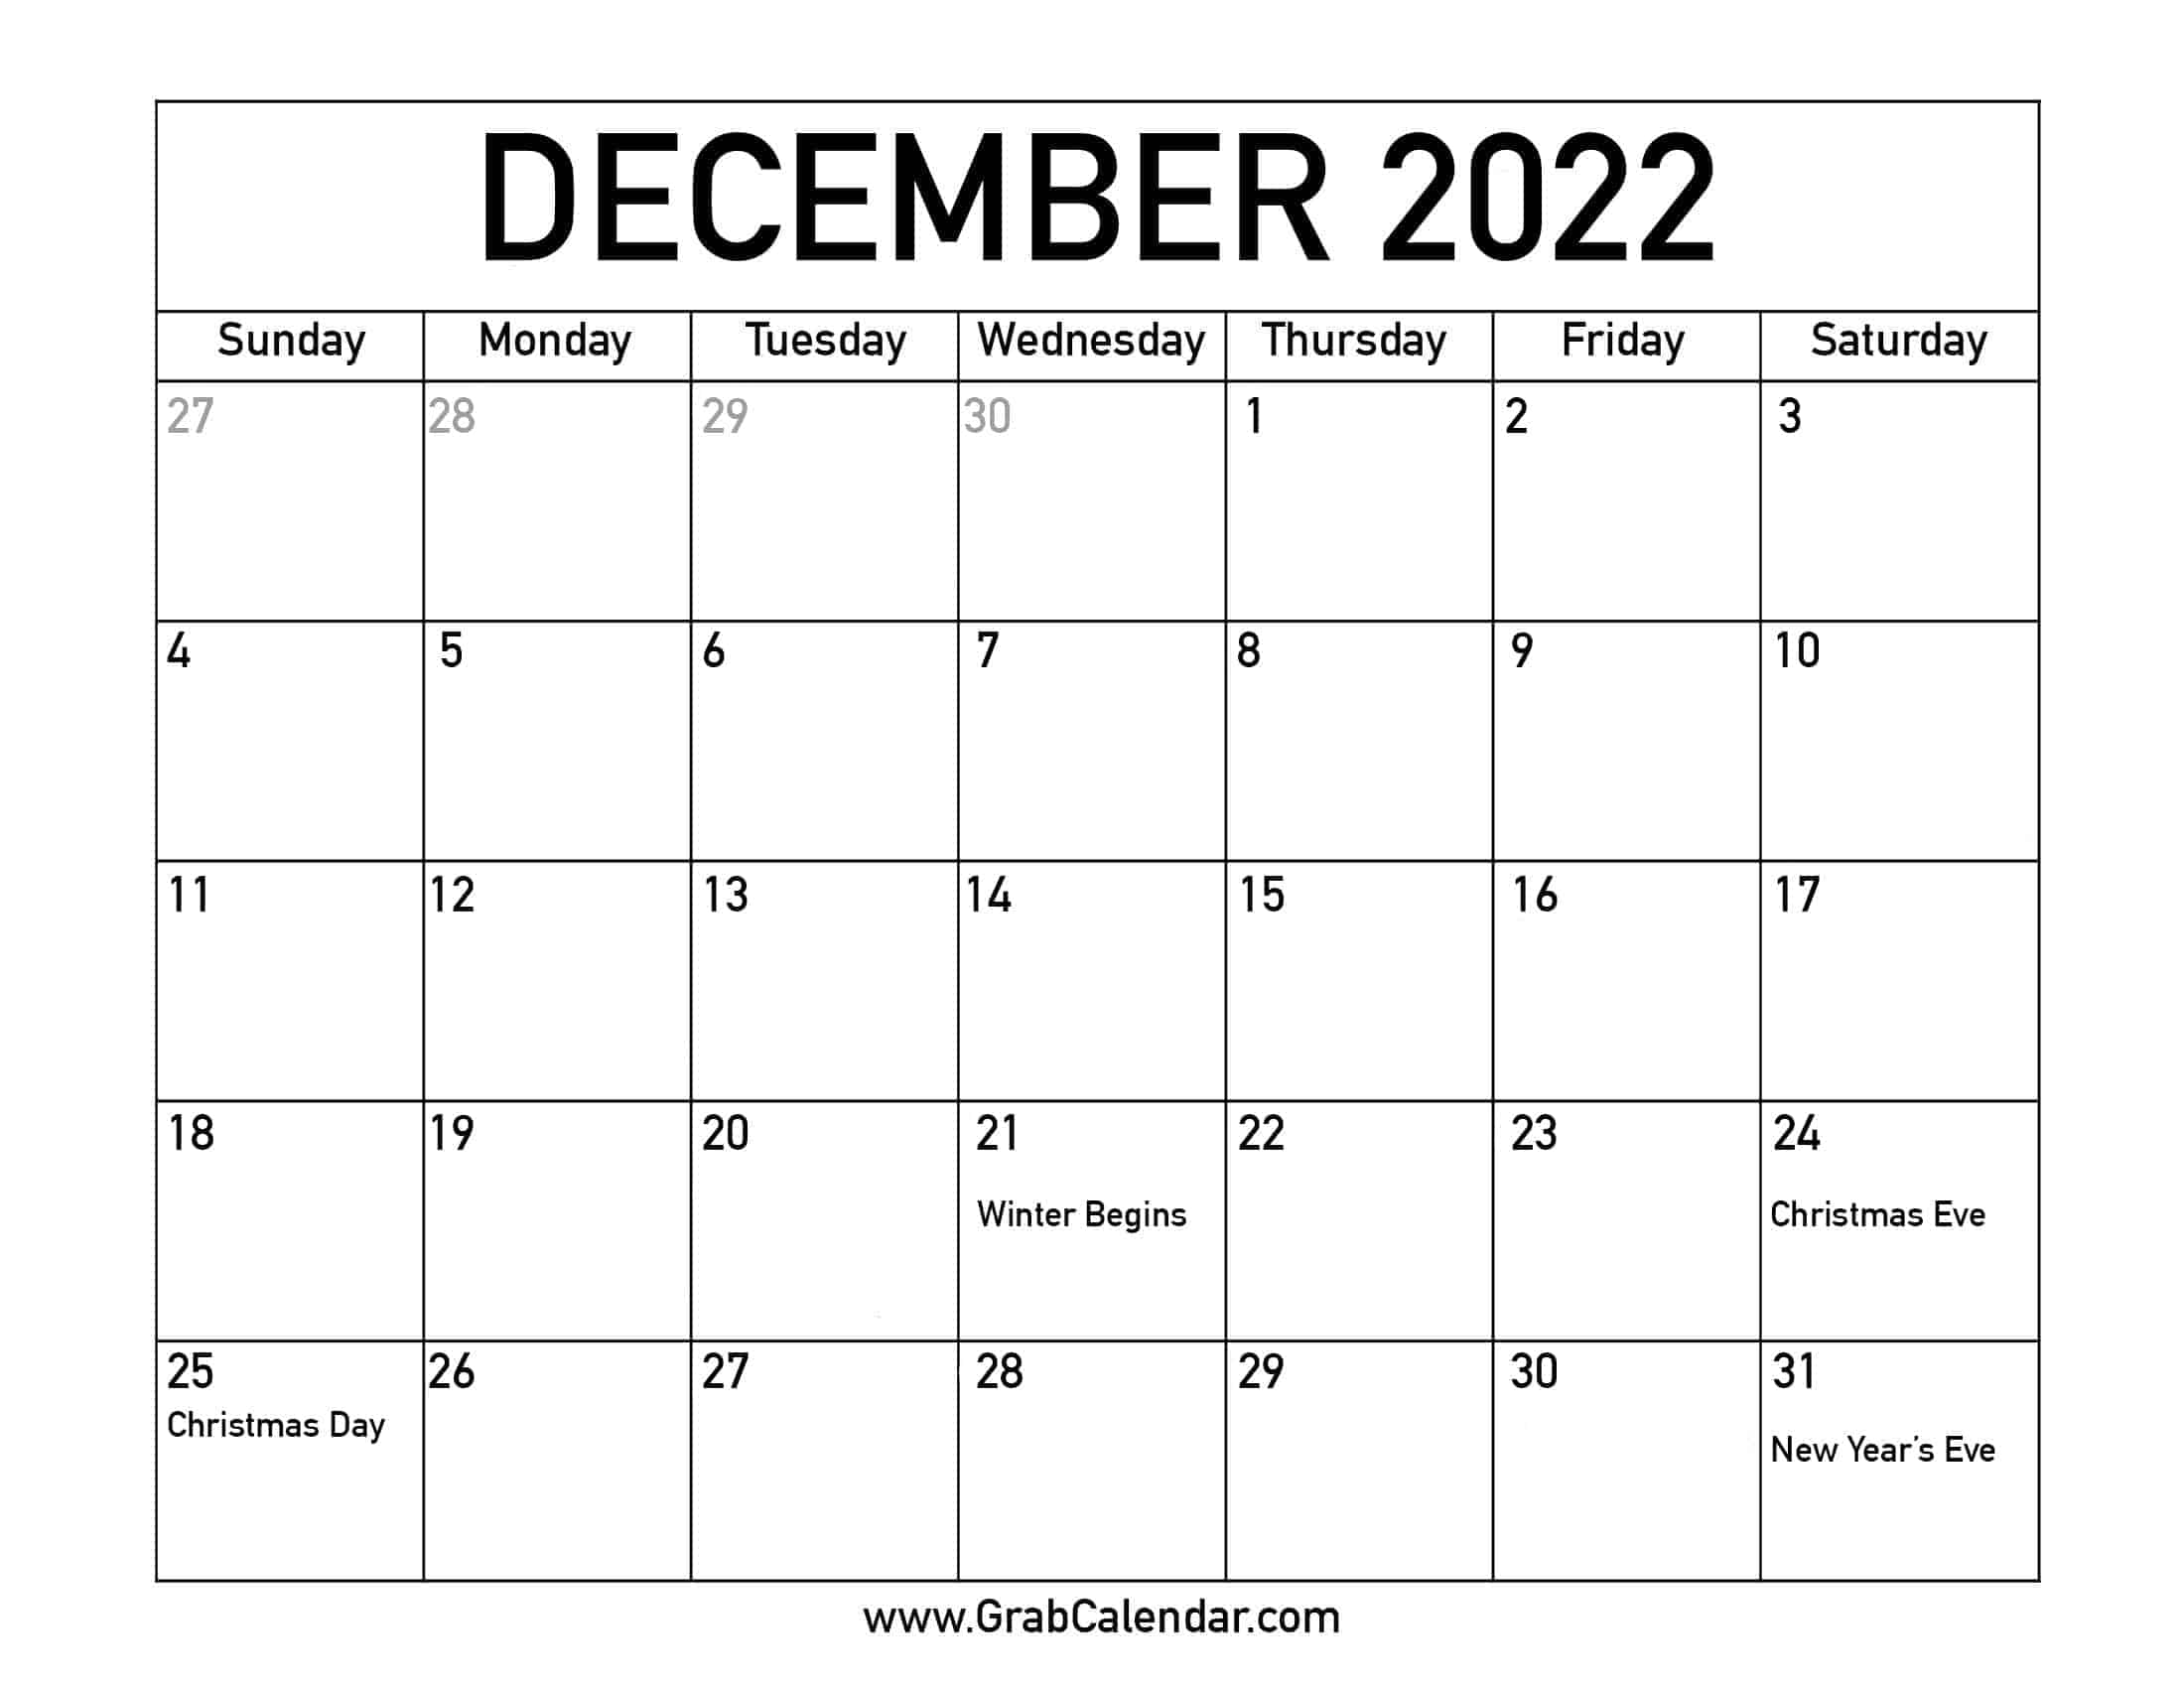 December 2022 Calendar With Holidays Printable December 2022 Calendar